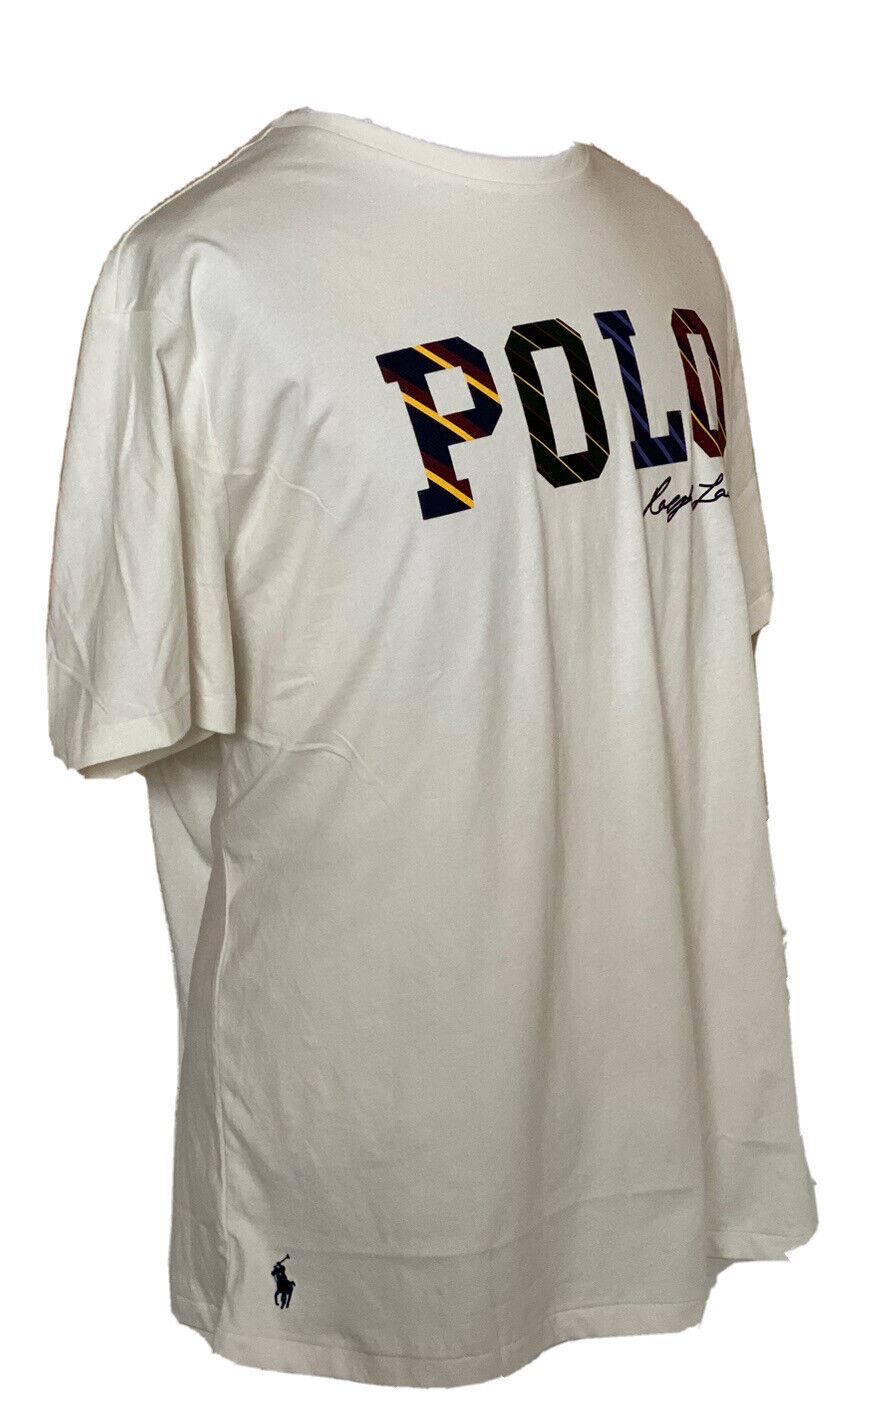 Neu mit Etikett: 65 $ Polo Ralph Lauren Kurzarm-T-Shirt mit Signature-Logo Weiß XL 